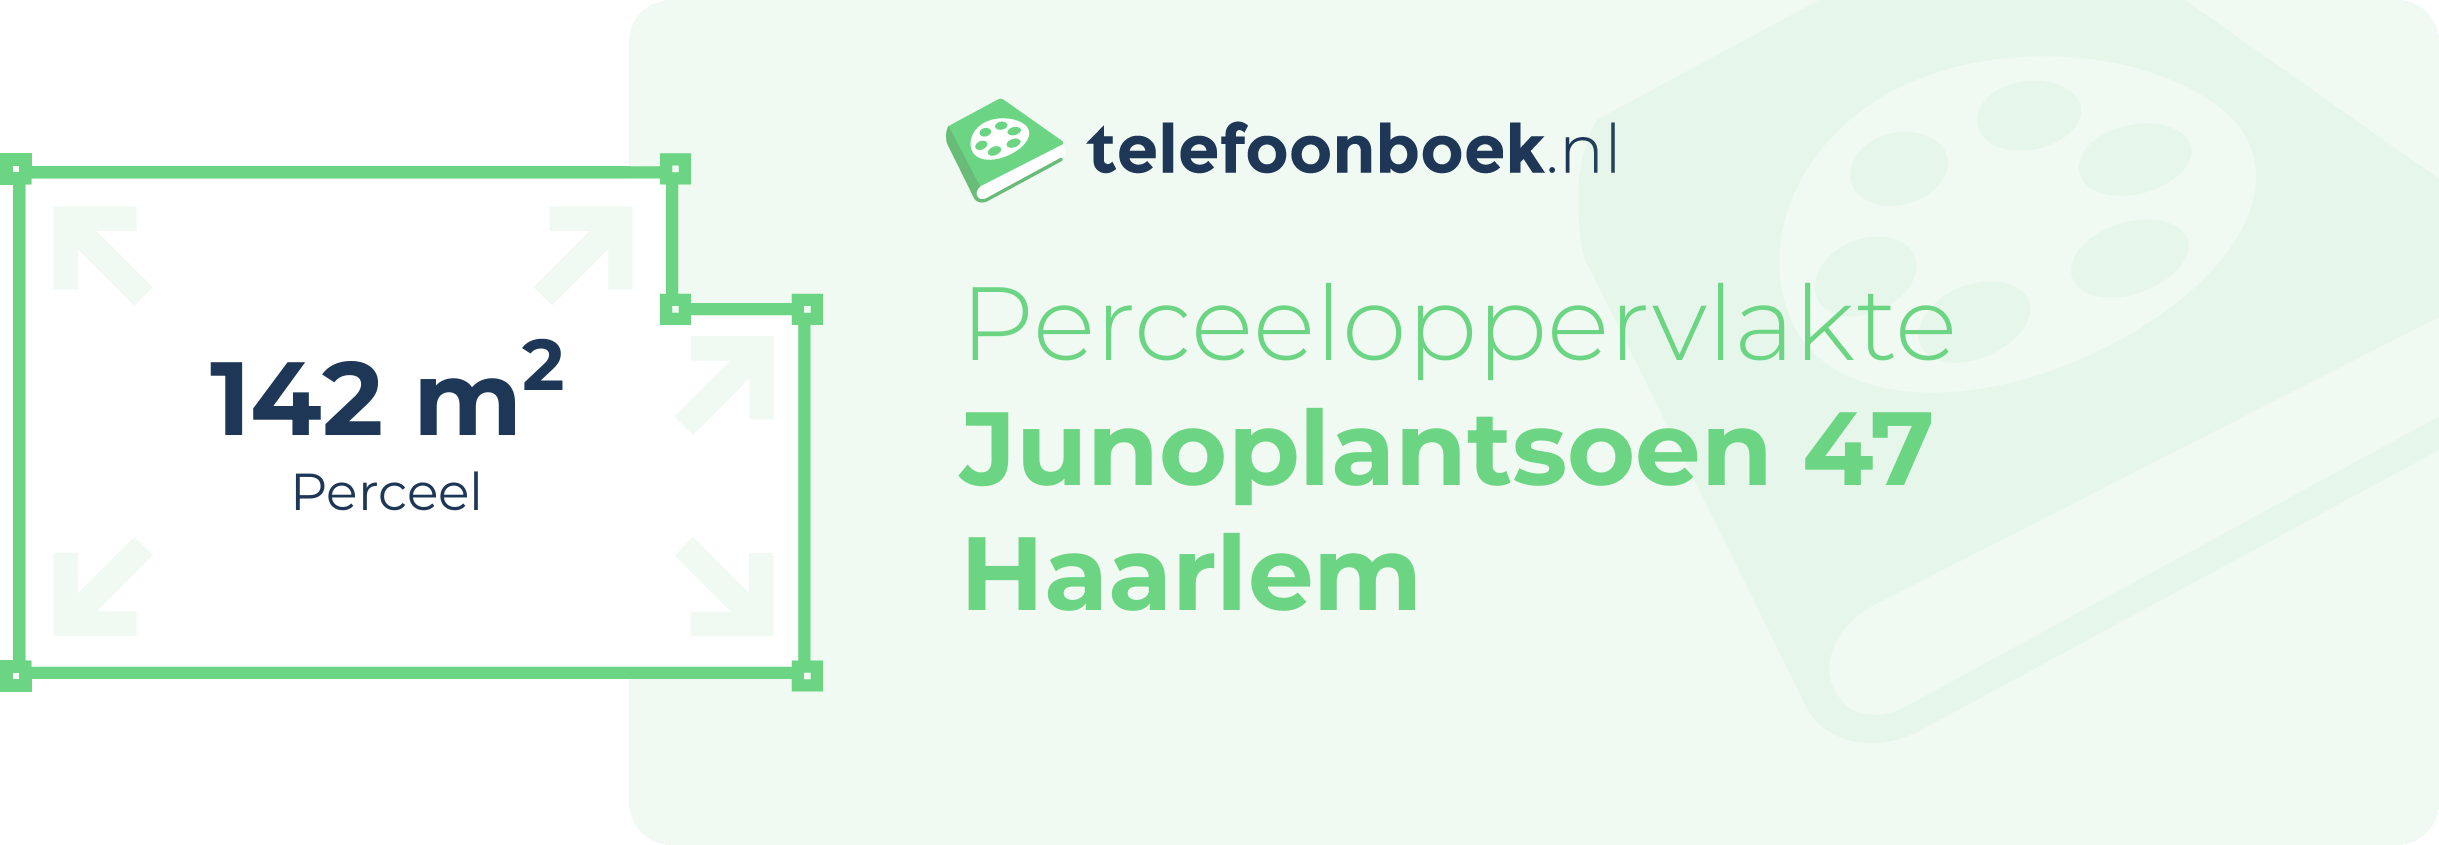 Perceeloppervlakte Junoplantsoen 47 Haarlem